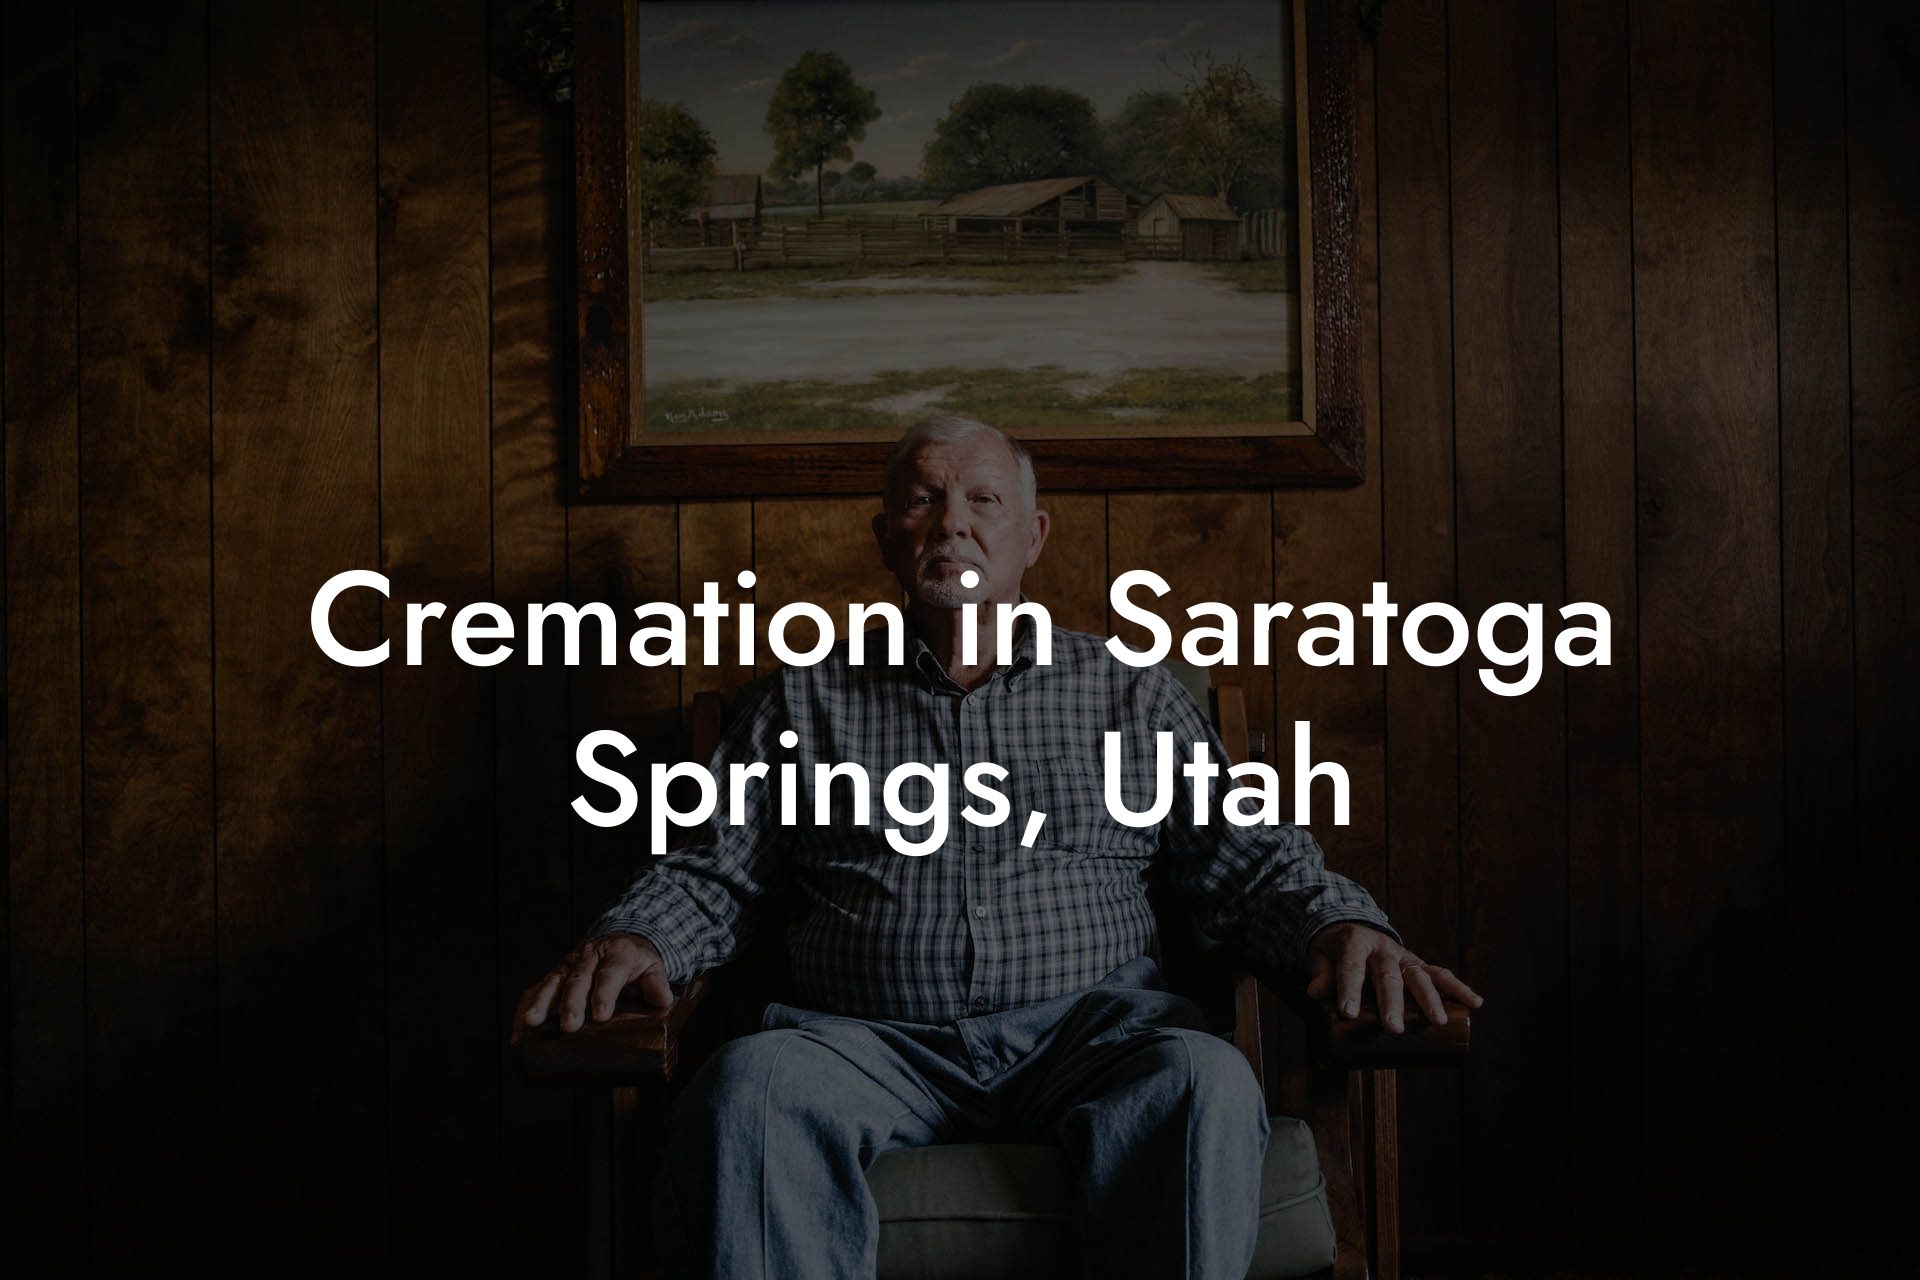 Cremation in Saratoga Springs, Utah